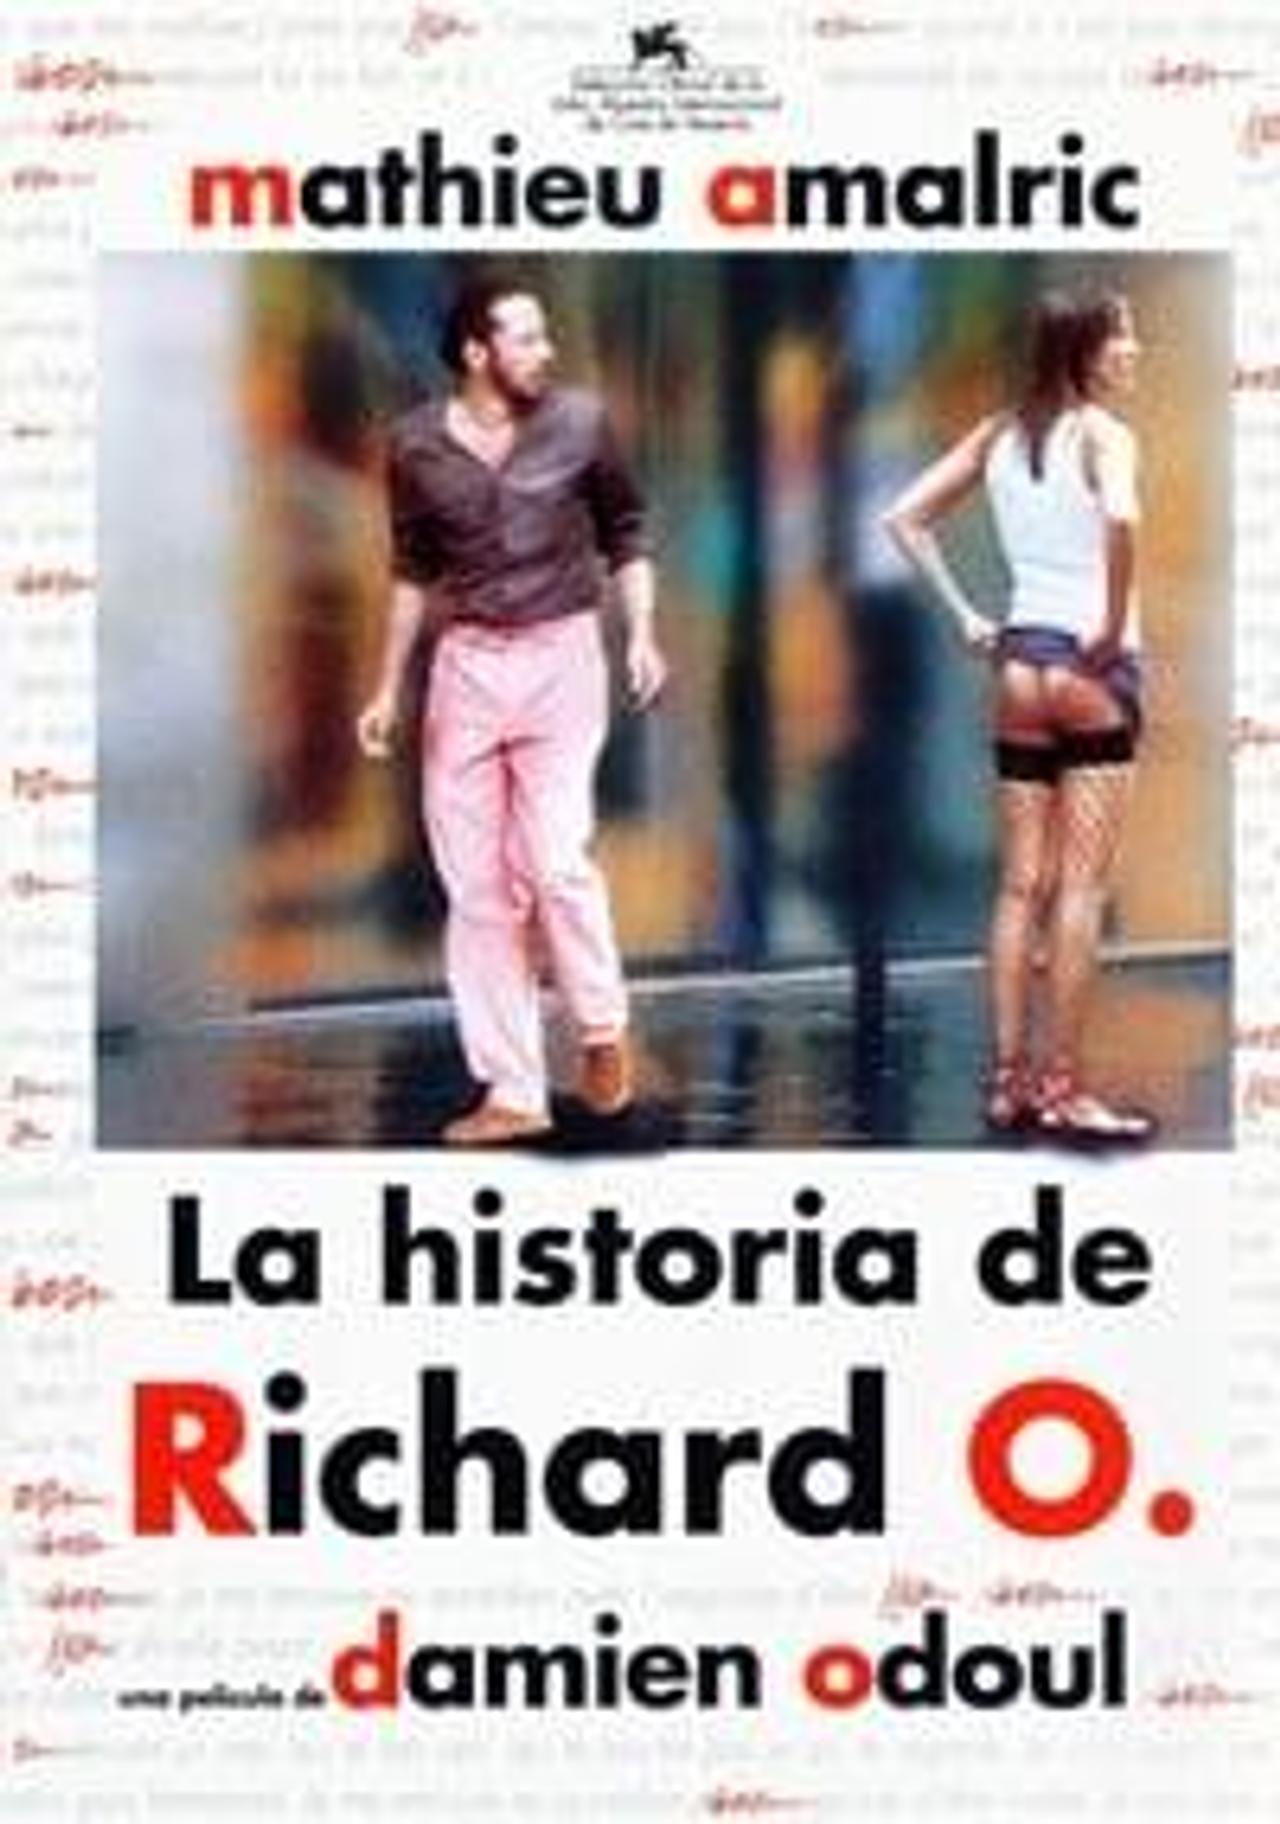 alexander kartashev recommends Story Of Richard O